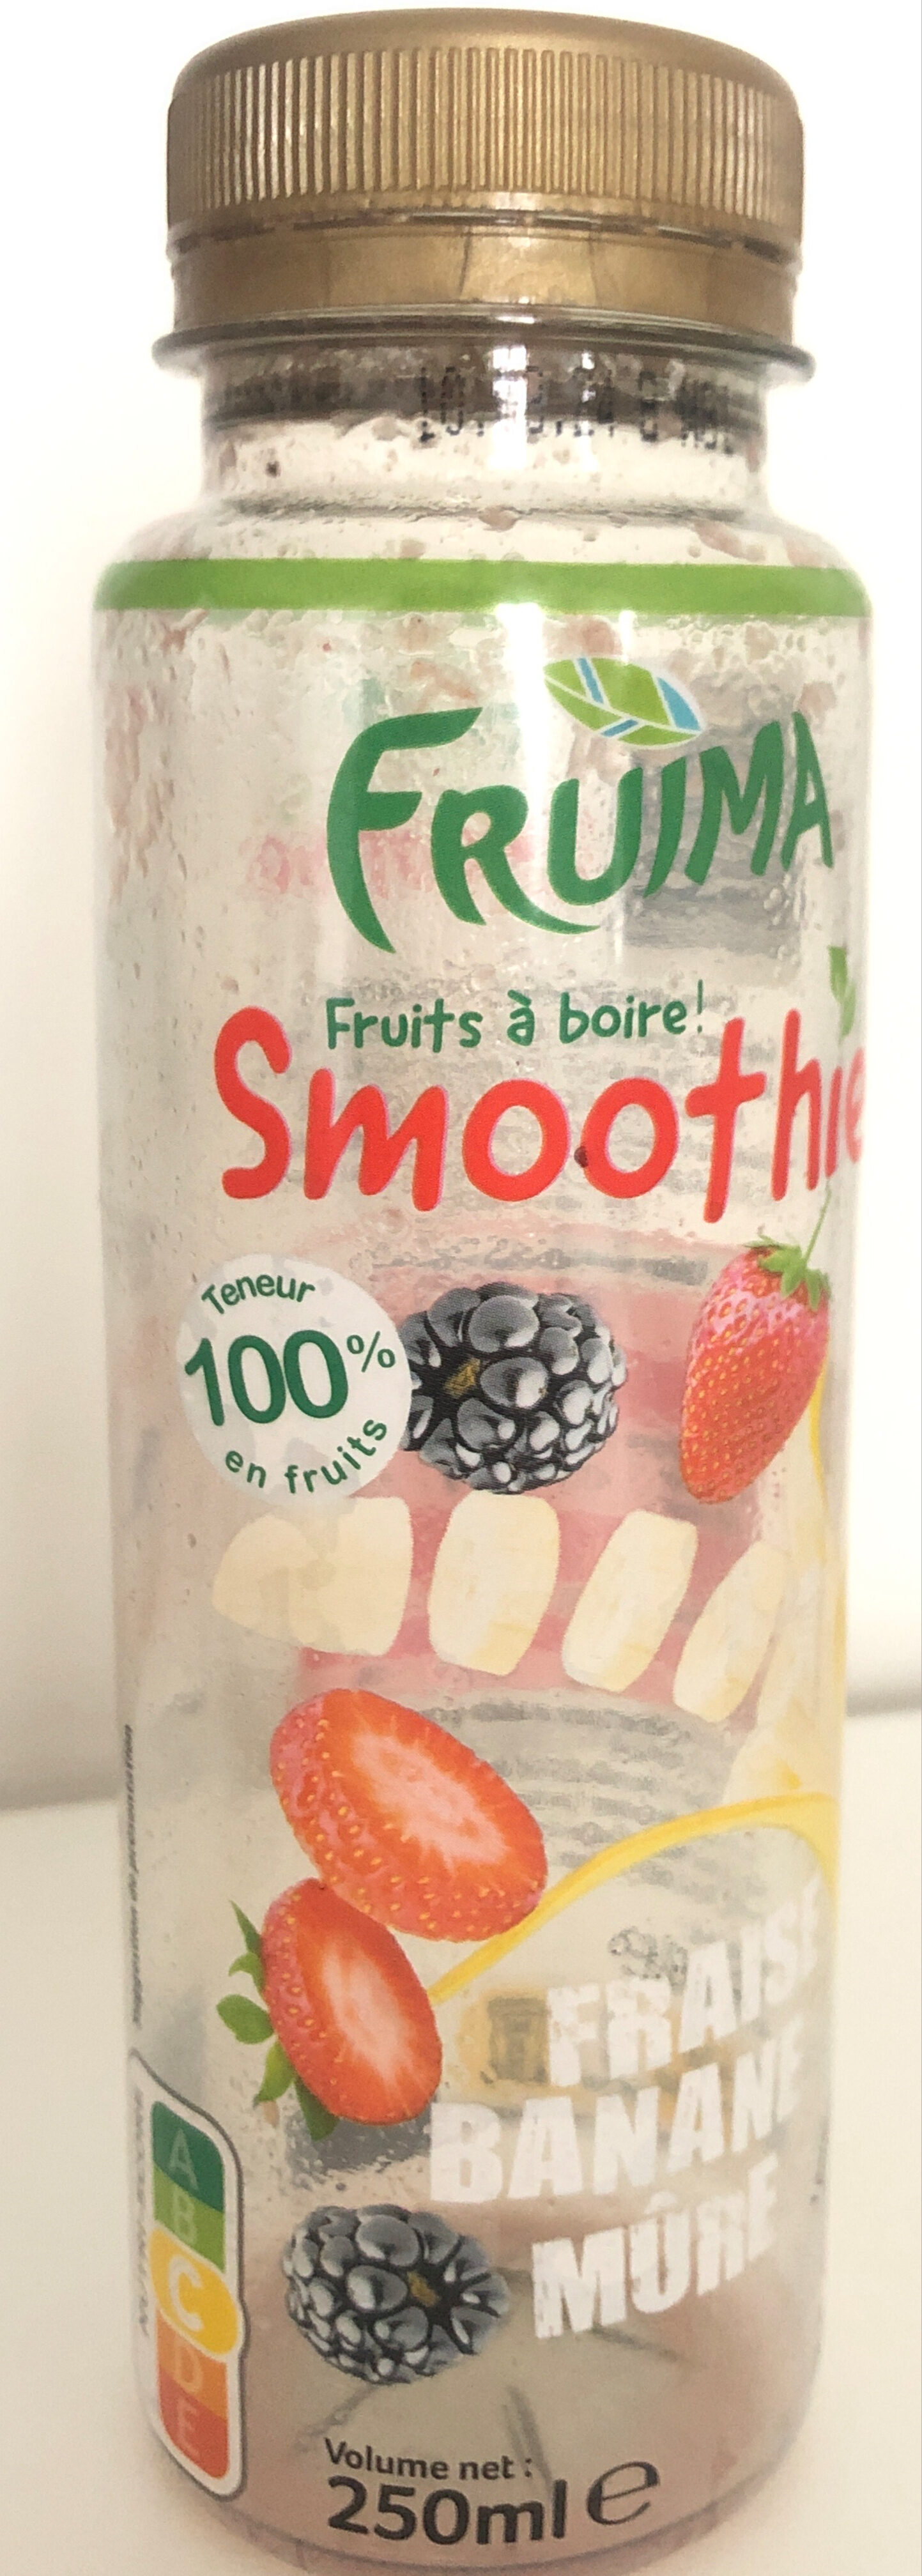 Smoothie fraise banane mûre - Product - fr